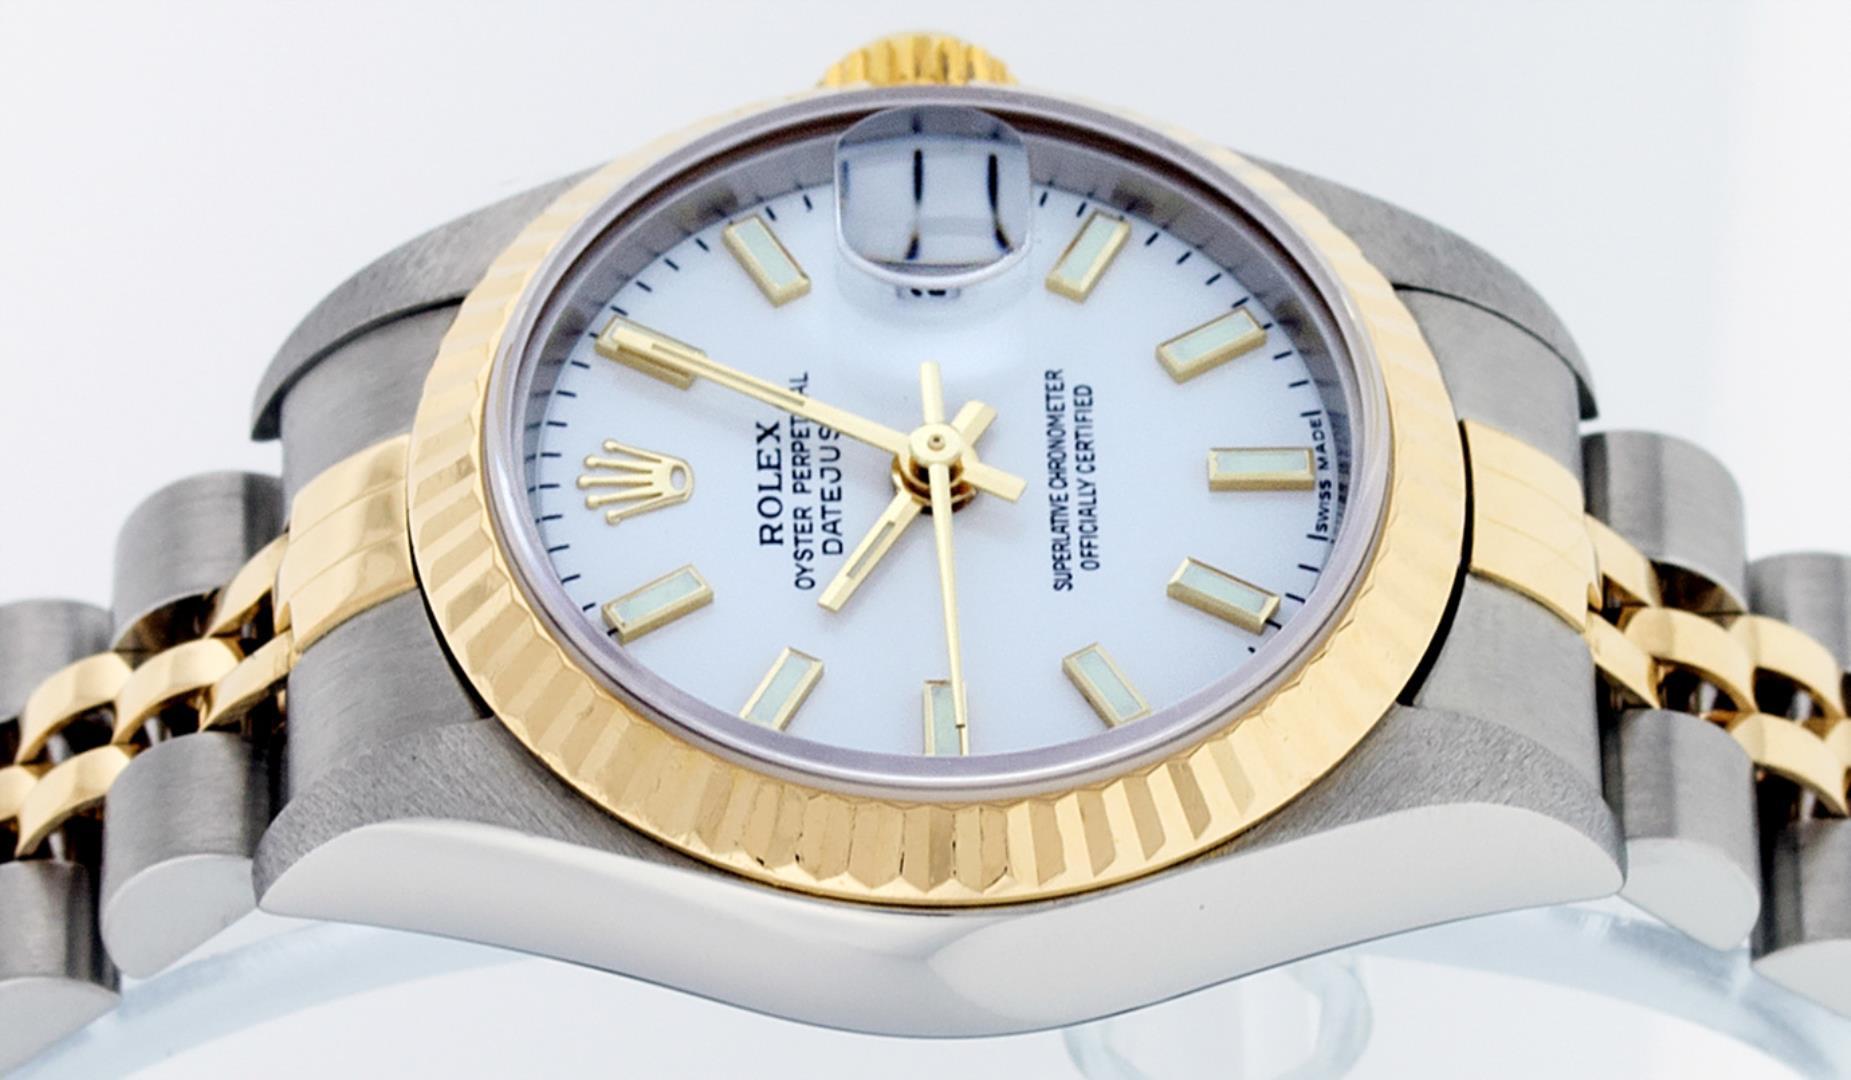 Rolex Ladies Two Tone White Index Datejust Wristwatch